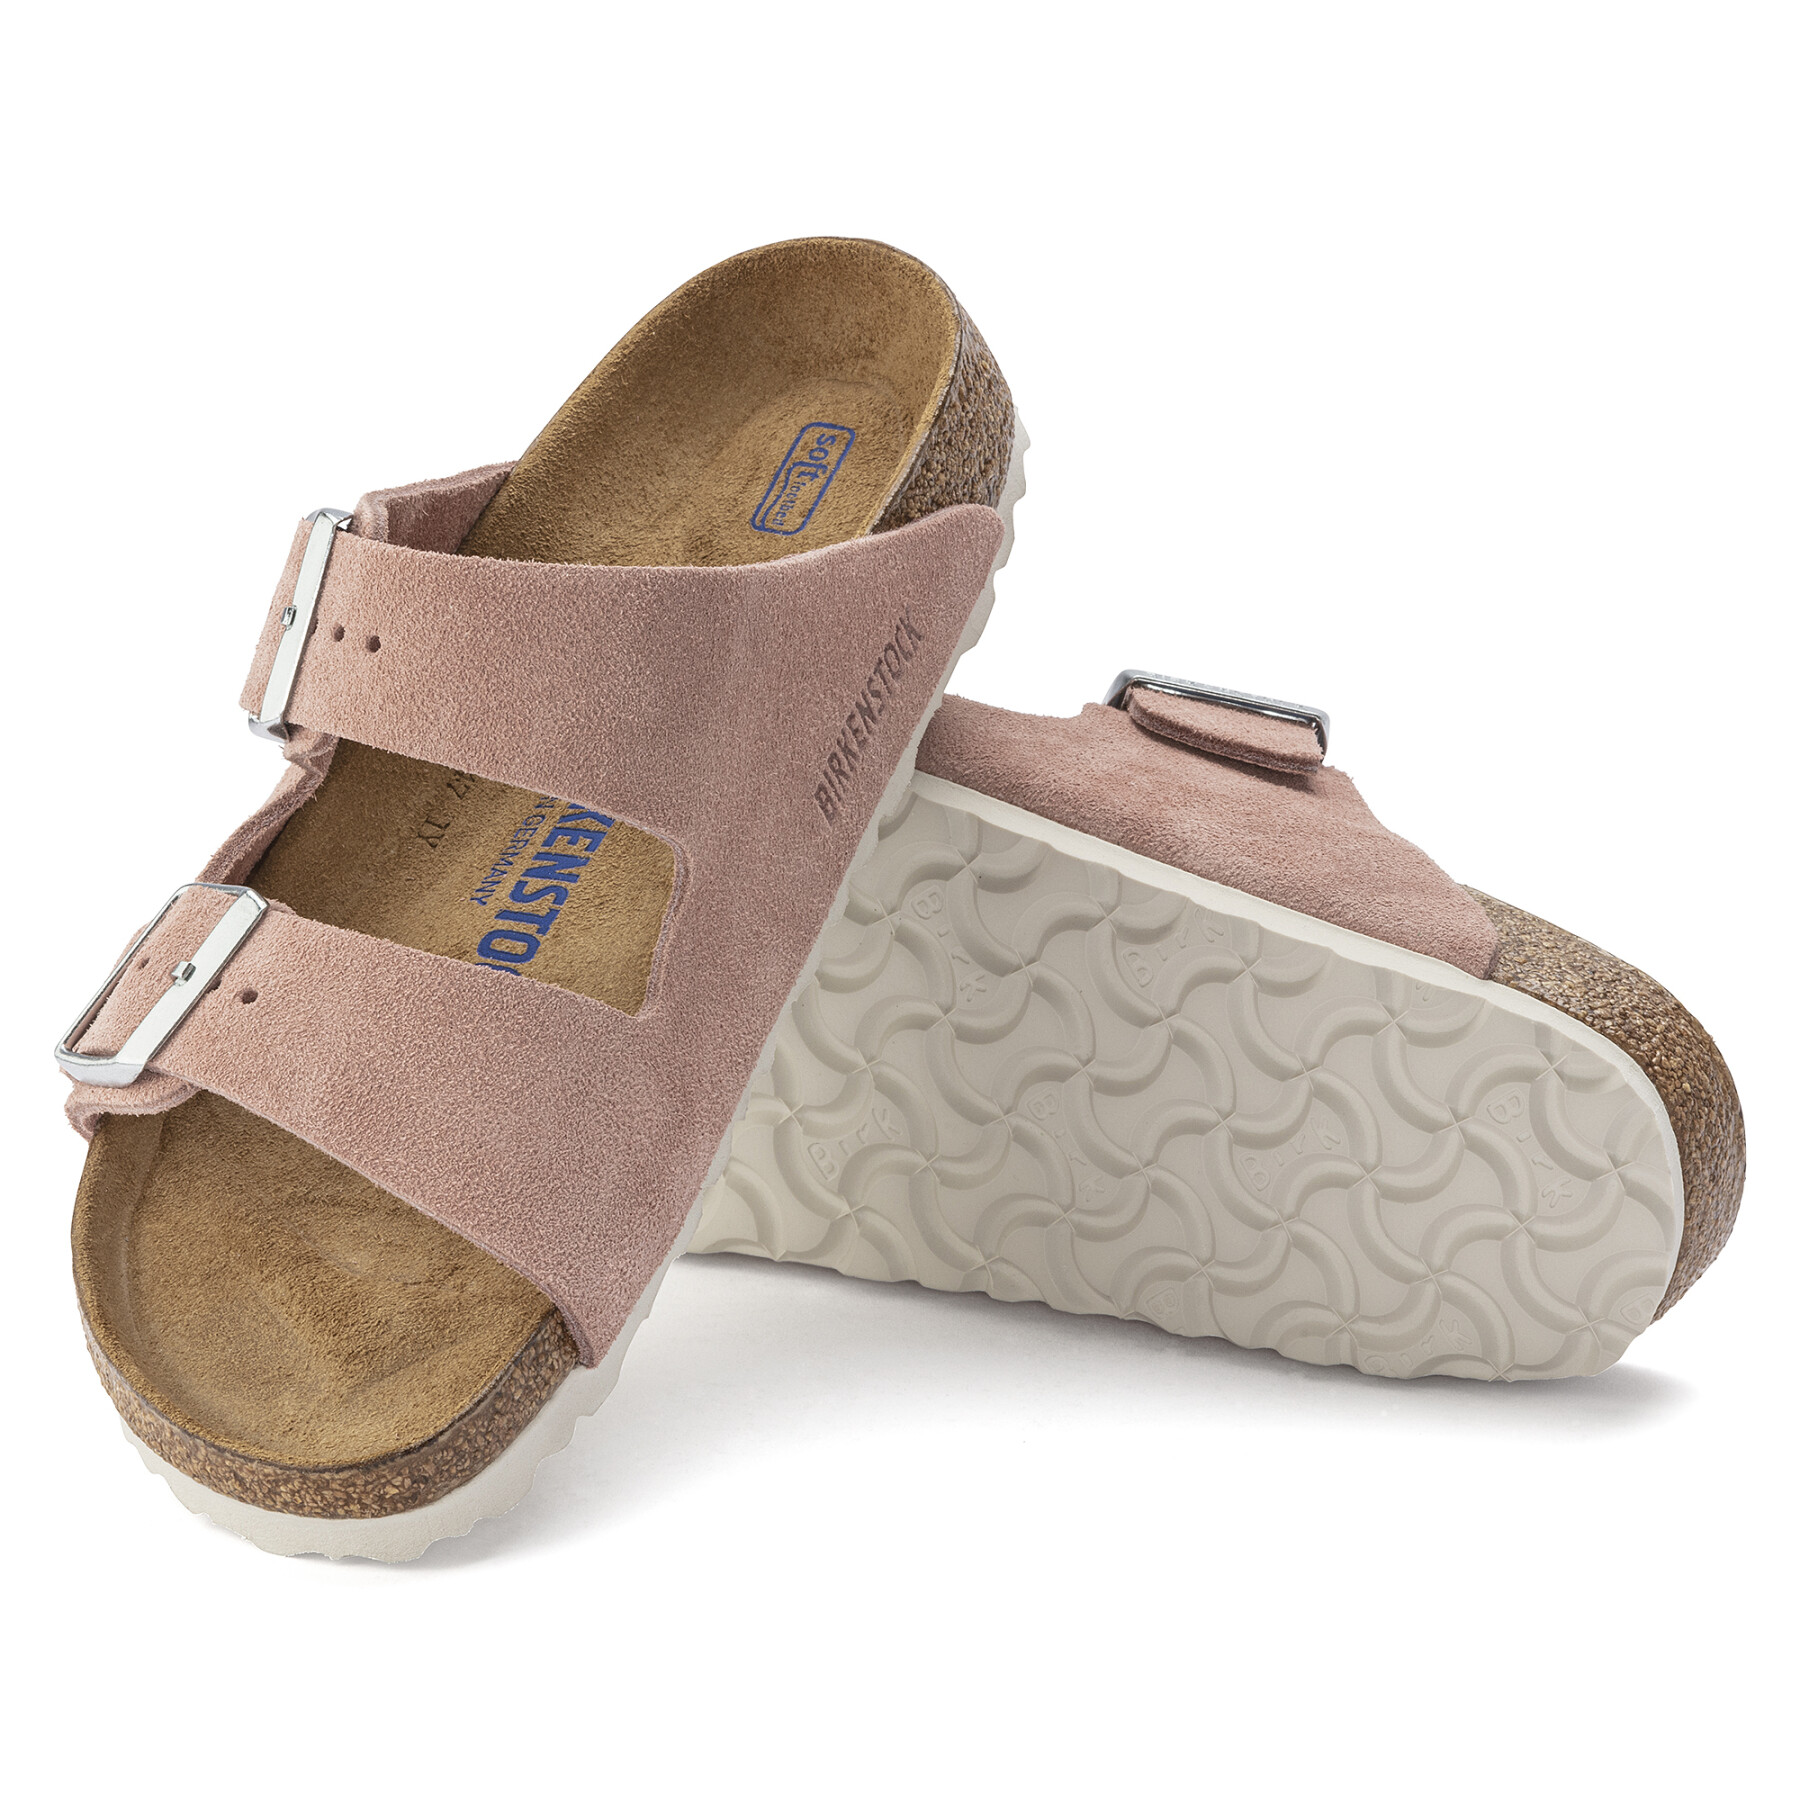 Women's sandals Birkenstock Arizona Soft Footbed Suede Leather